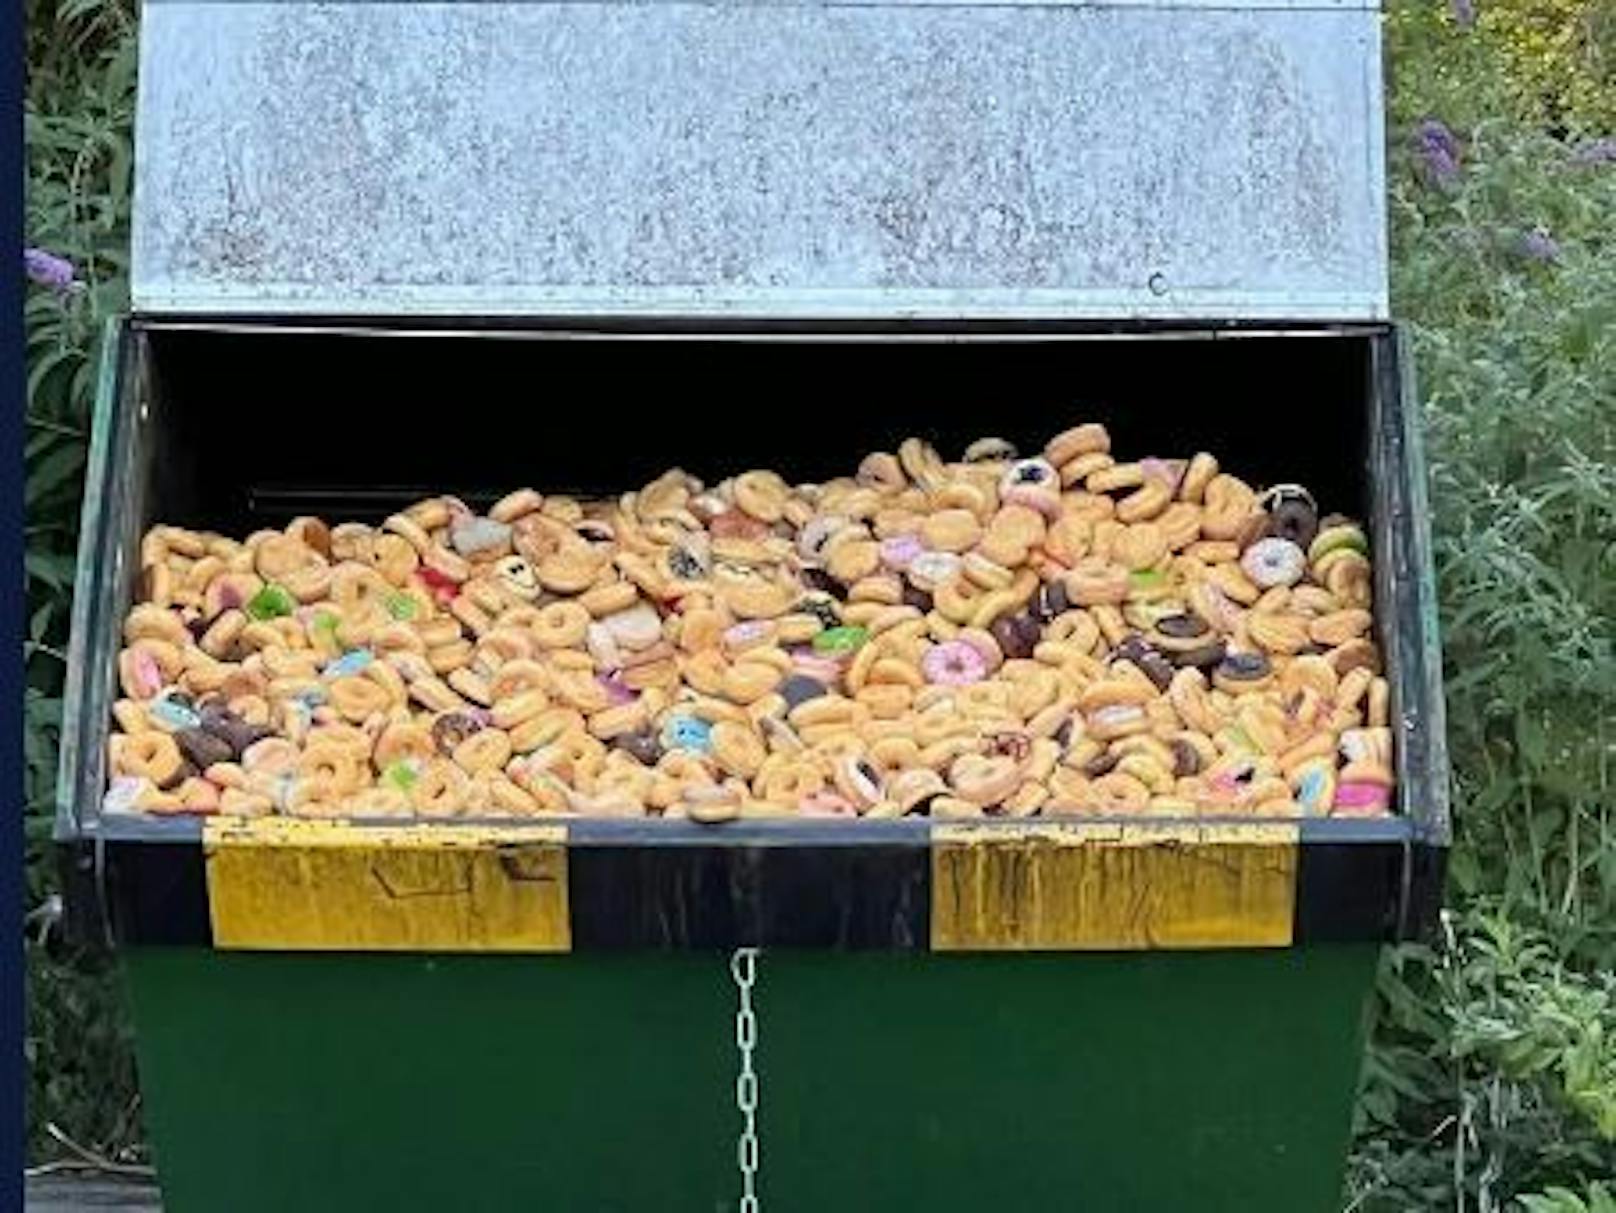 Verschwendung: Hunderte Donuts landen unberührt im Müll